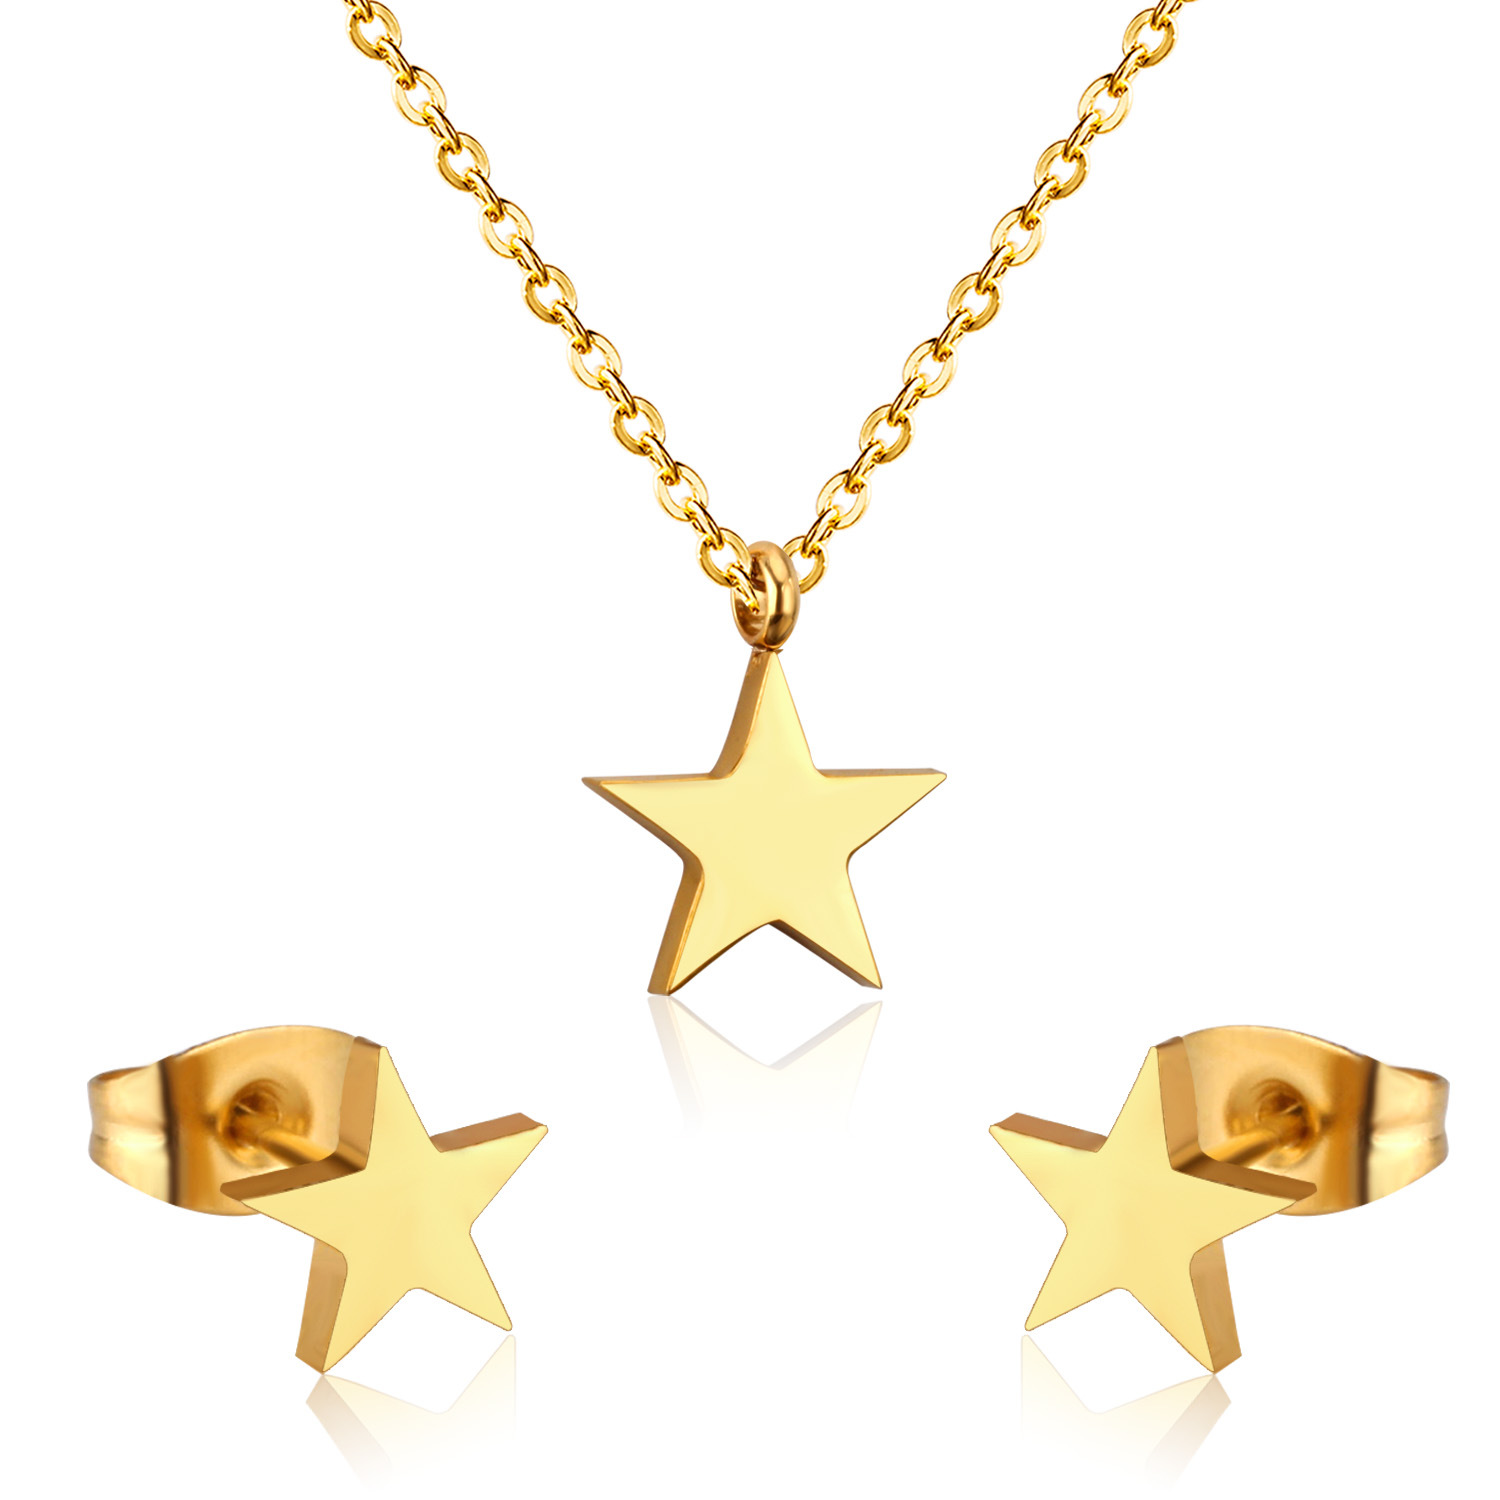 2:golden star